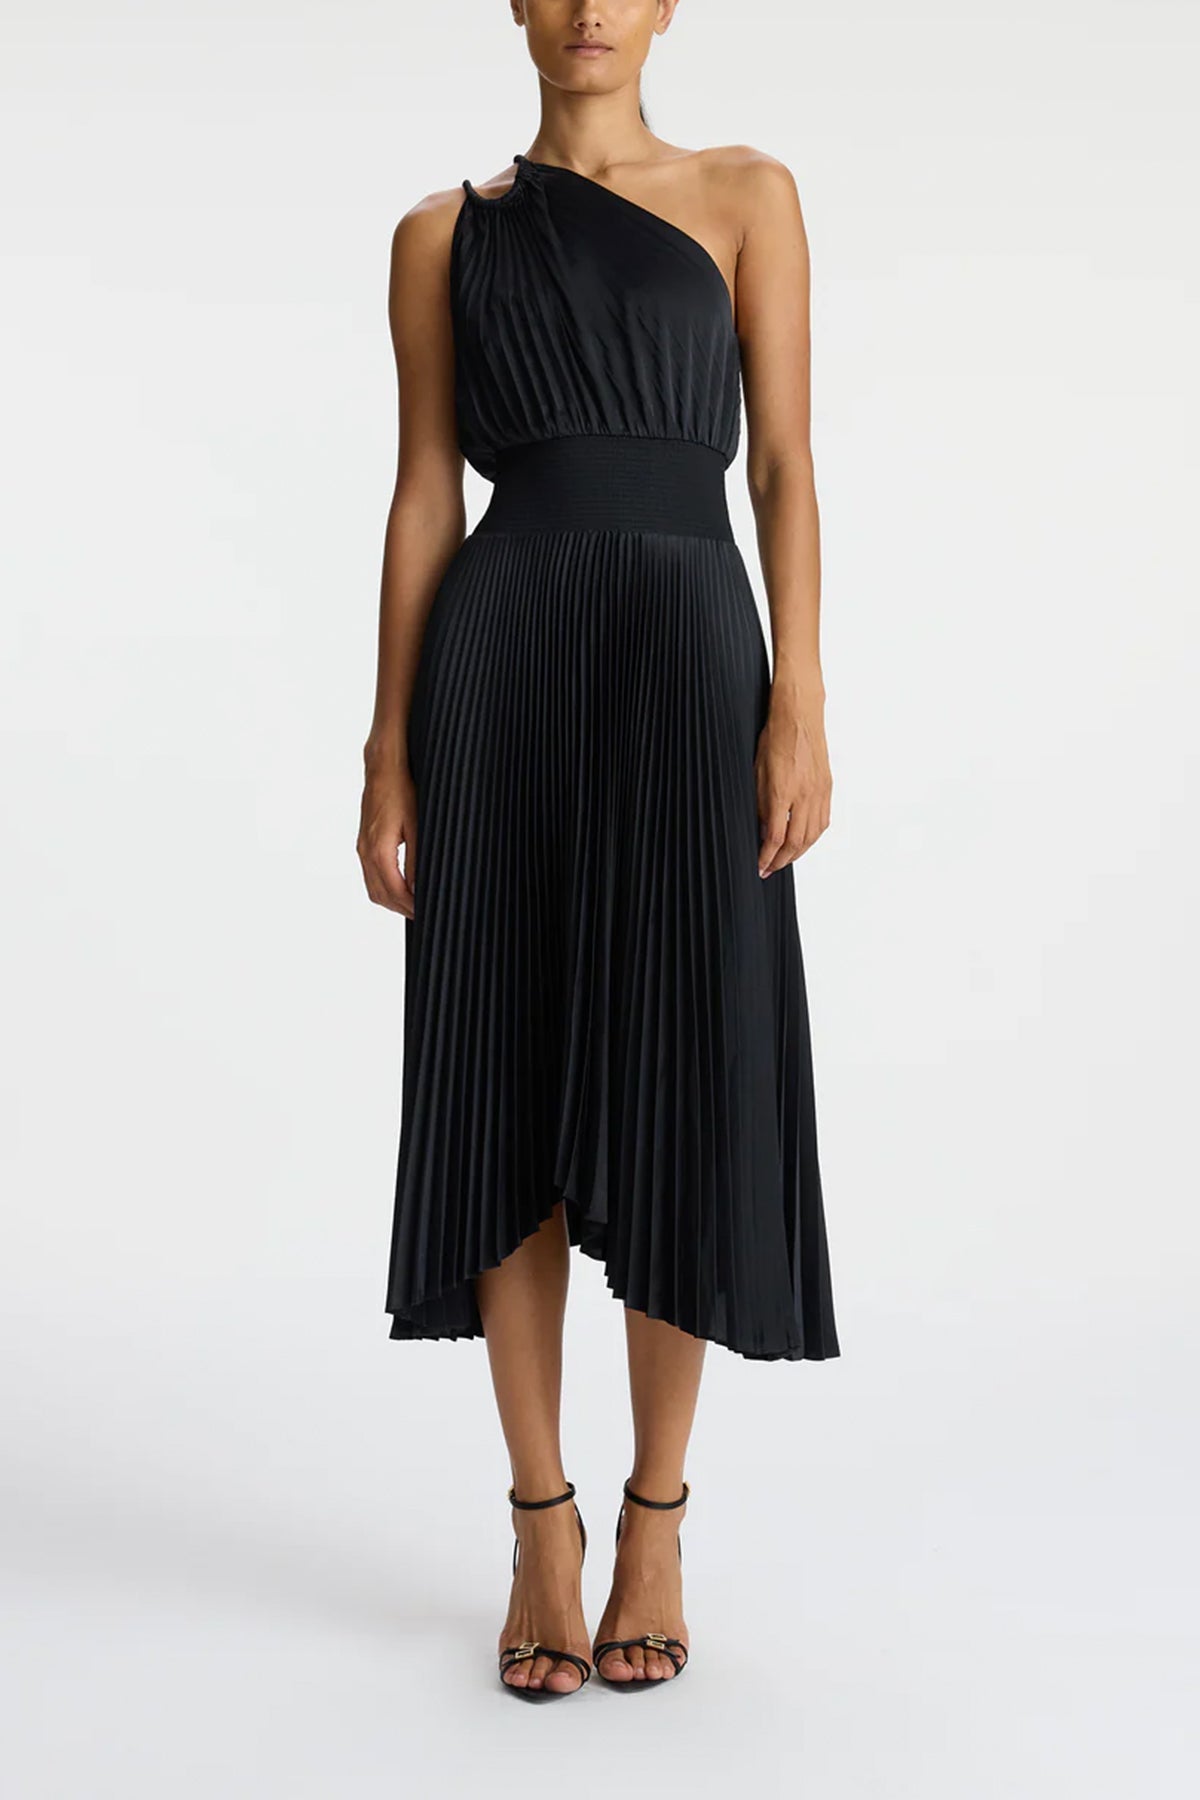 Ruby Satin Pleated Dress in Black - shop-olivia.com